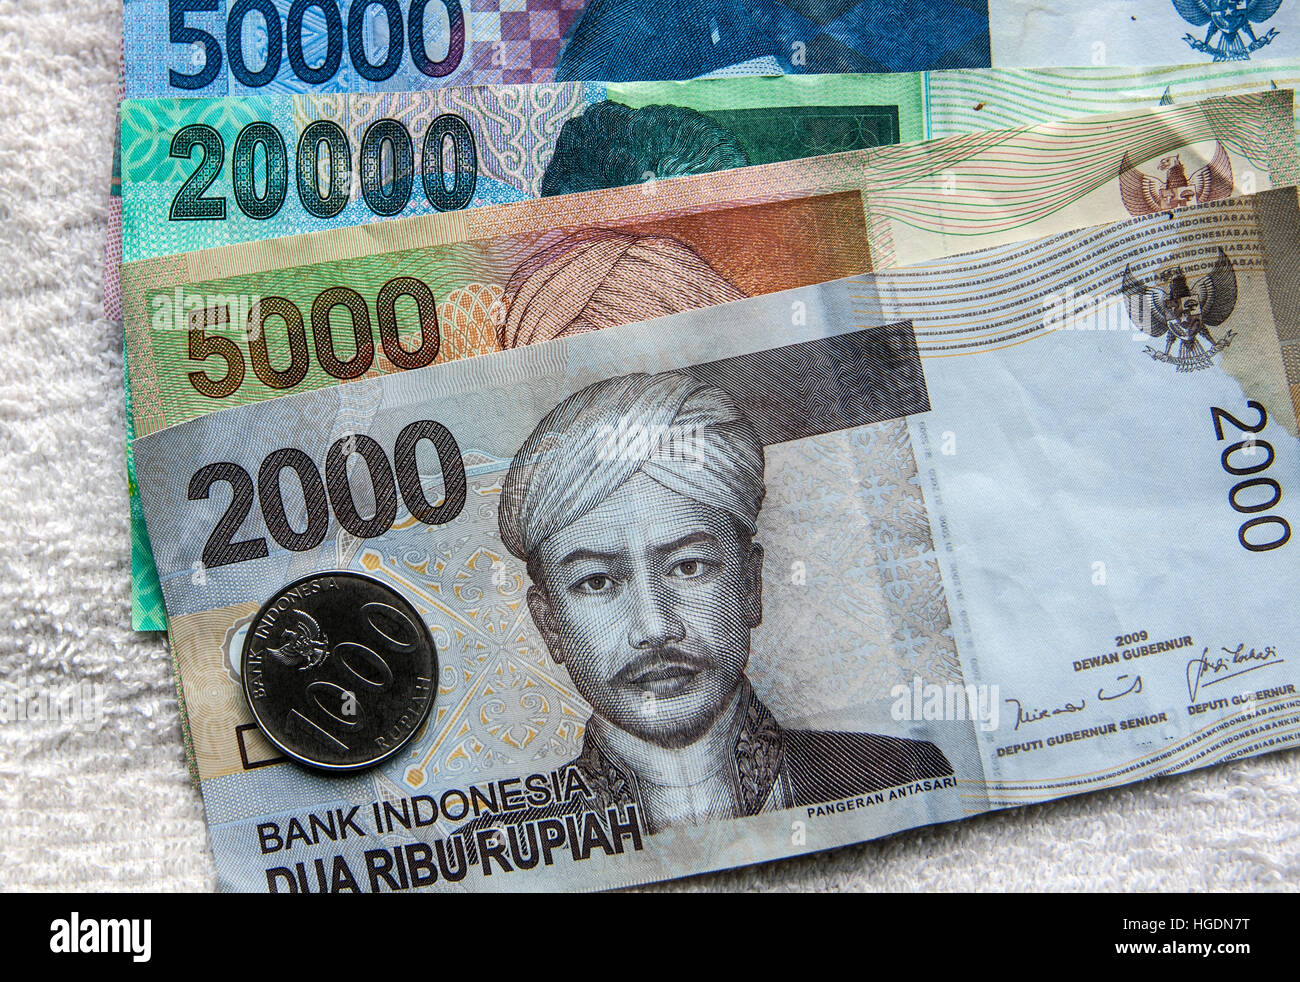 Rupiah currency Bali Indonesia Stock Photo - Alamy